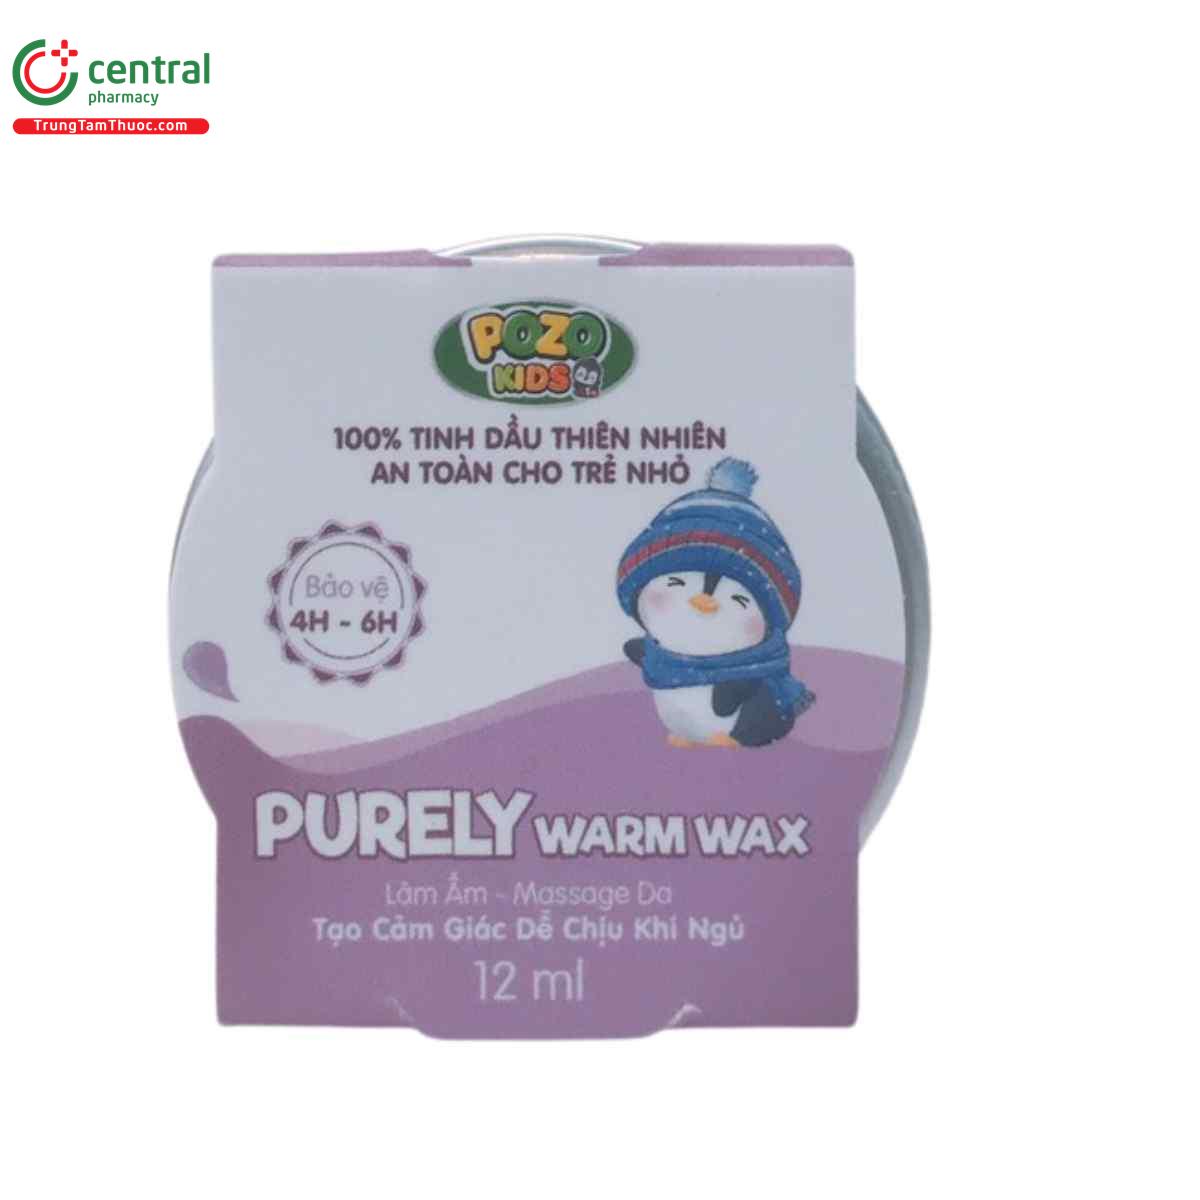 purely warm wax 5 O5433